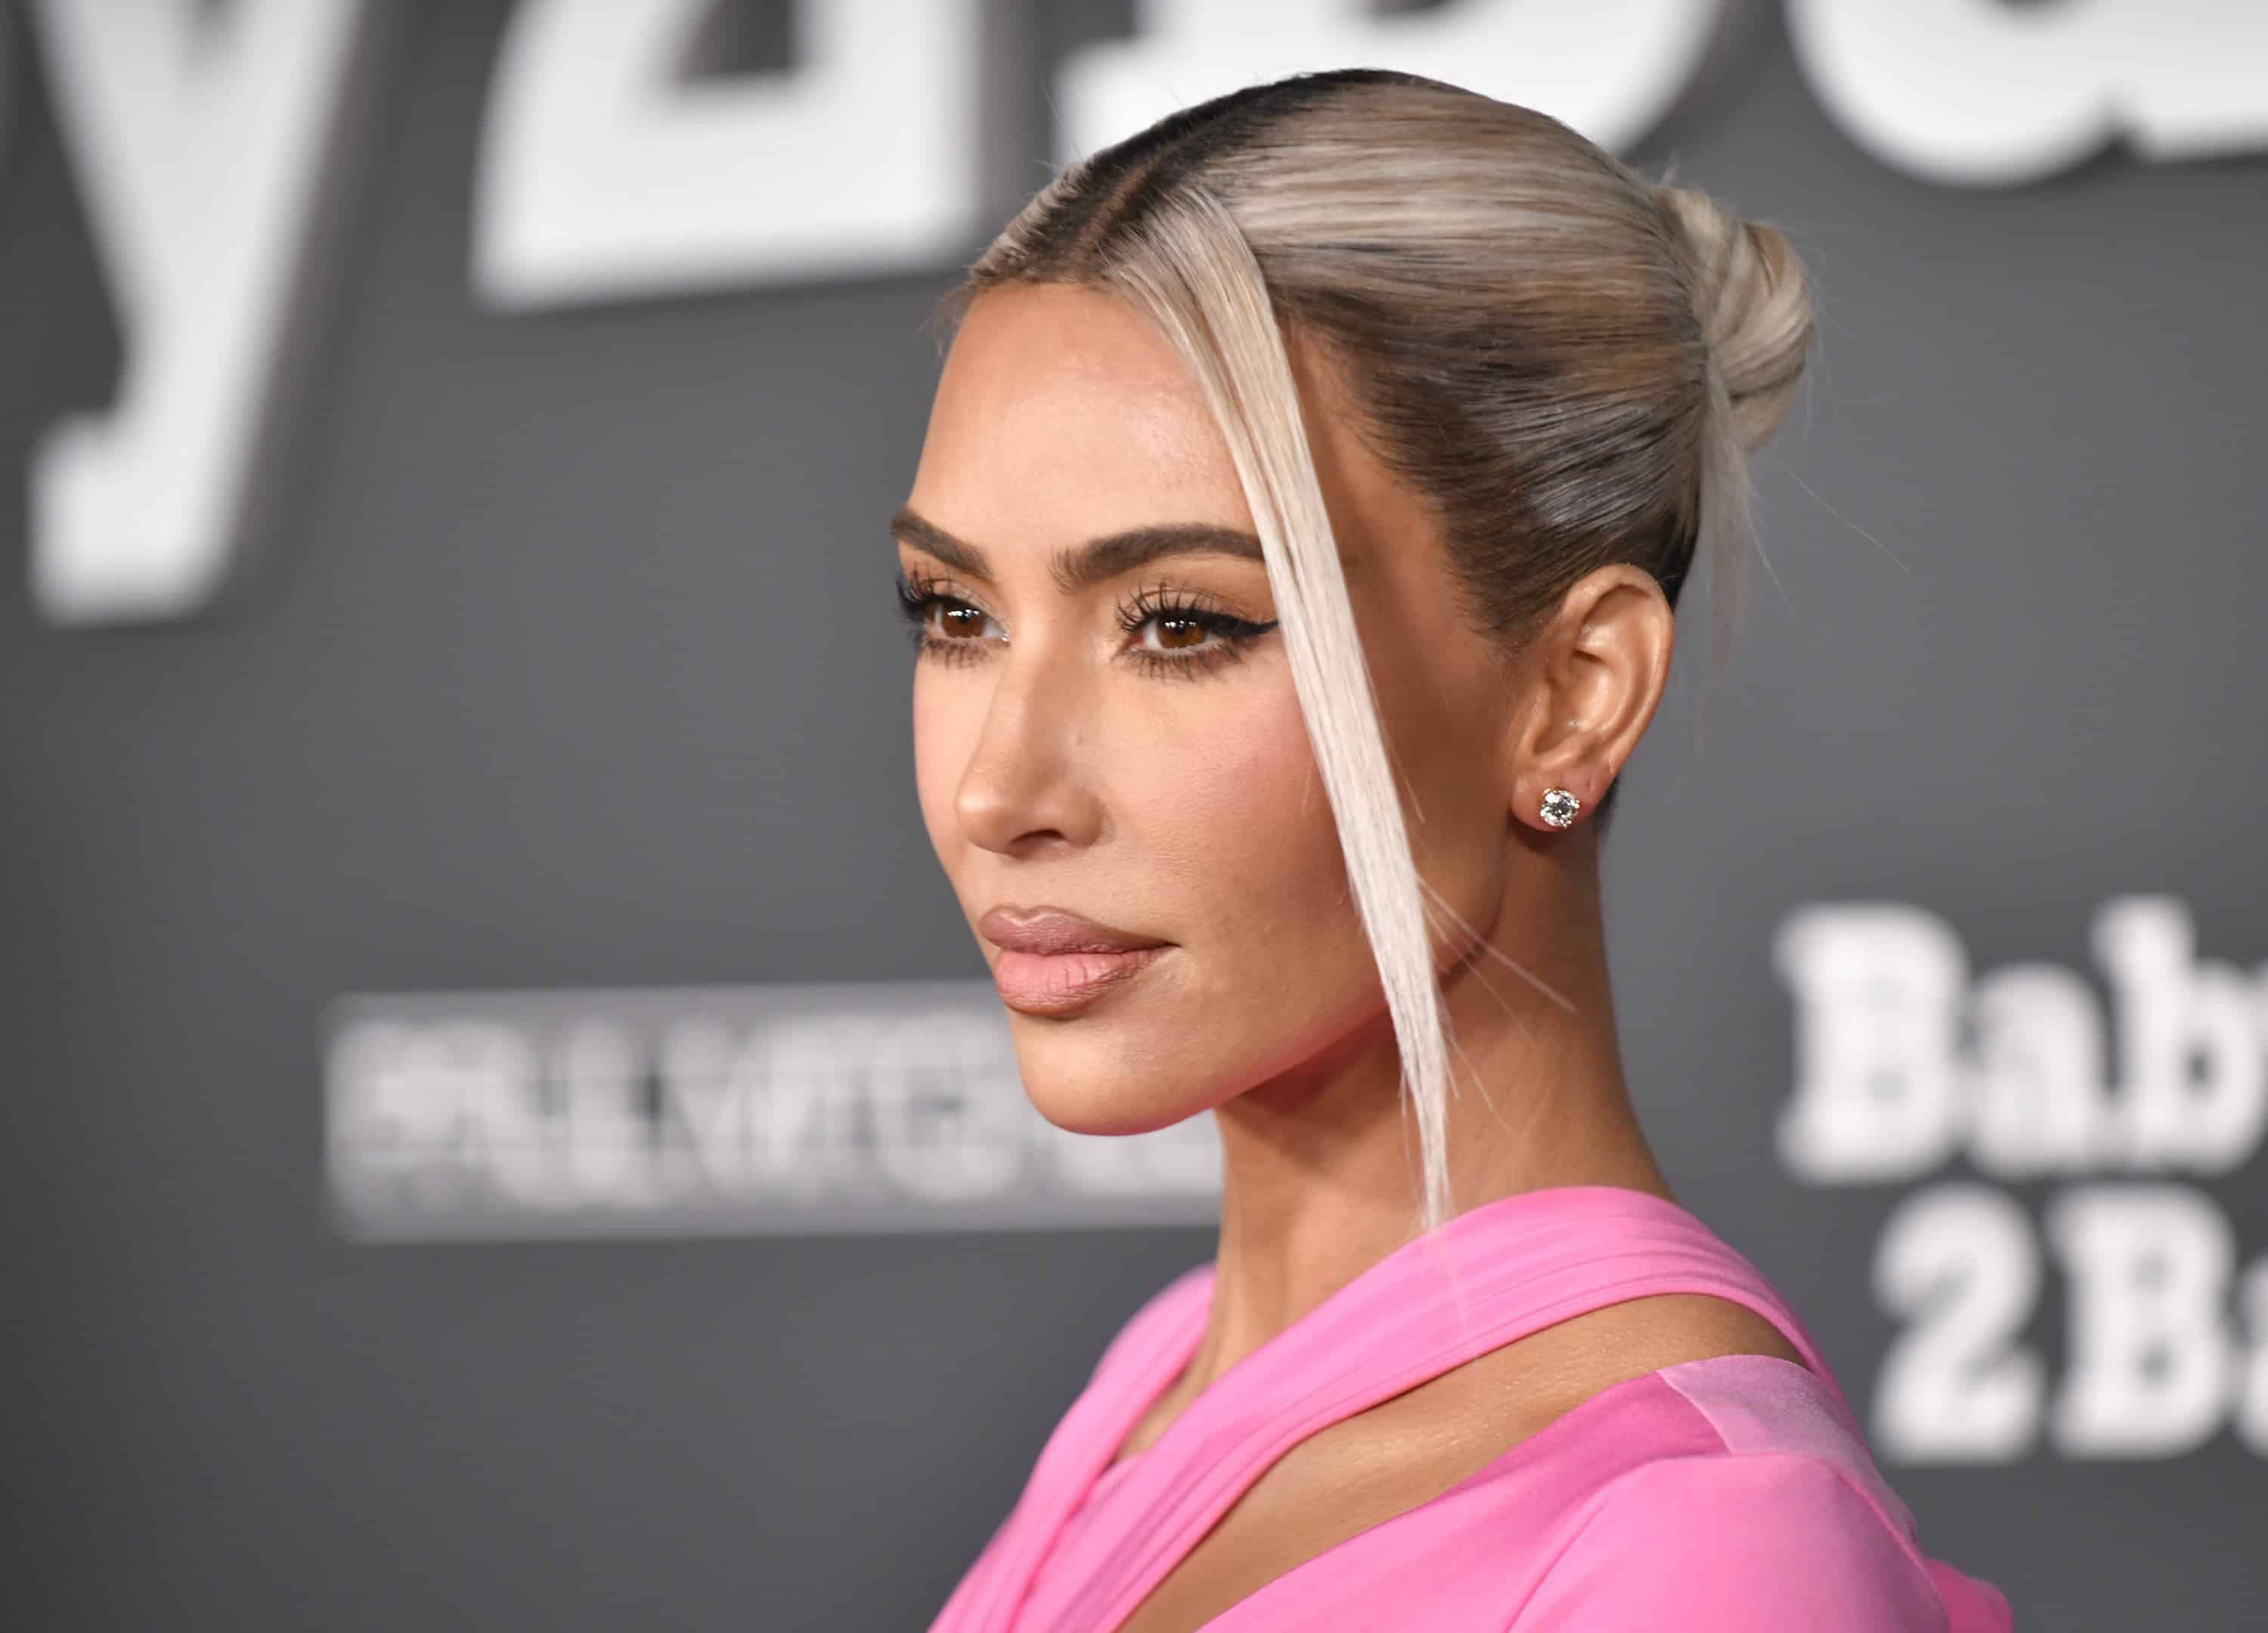 Social Media Reacts To Rare Video Of Kim Kardashian Showing Off Her Natural Shoulder-Length Hair